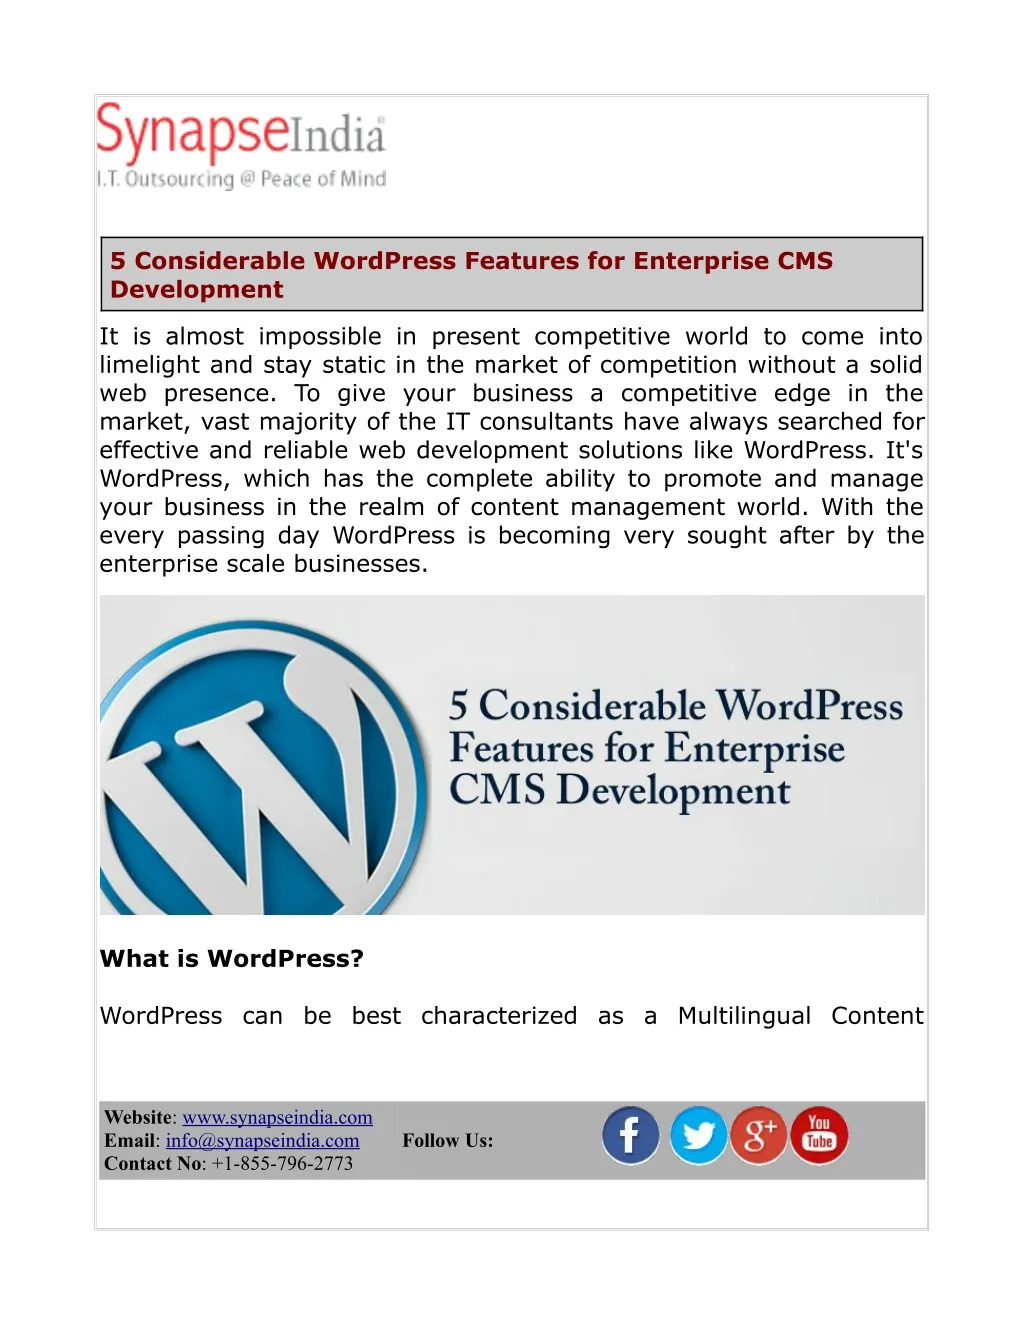 5 considerable wordpress features for enterprise